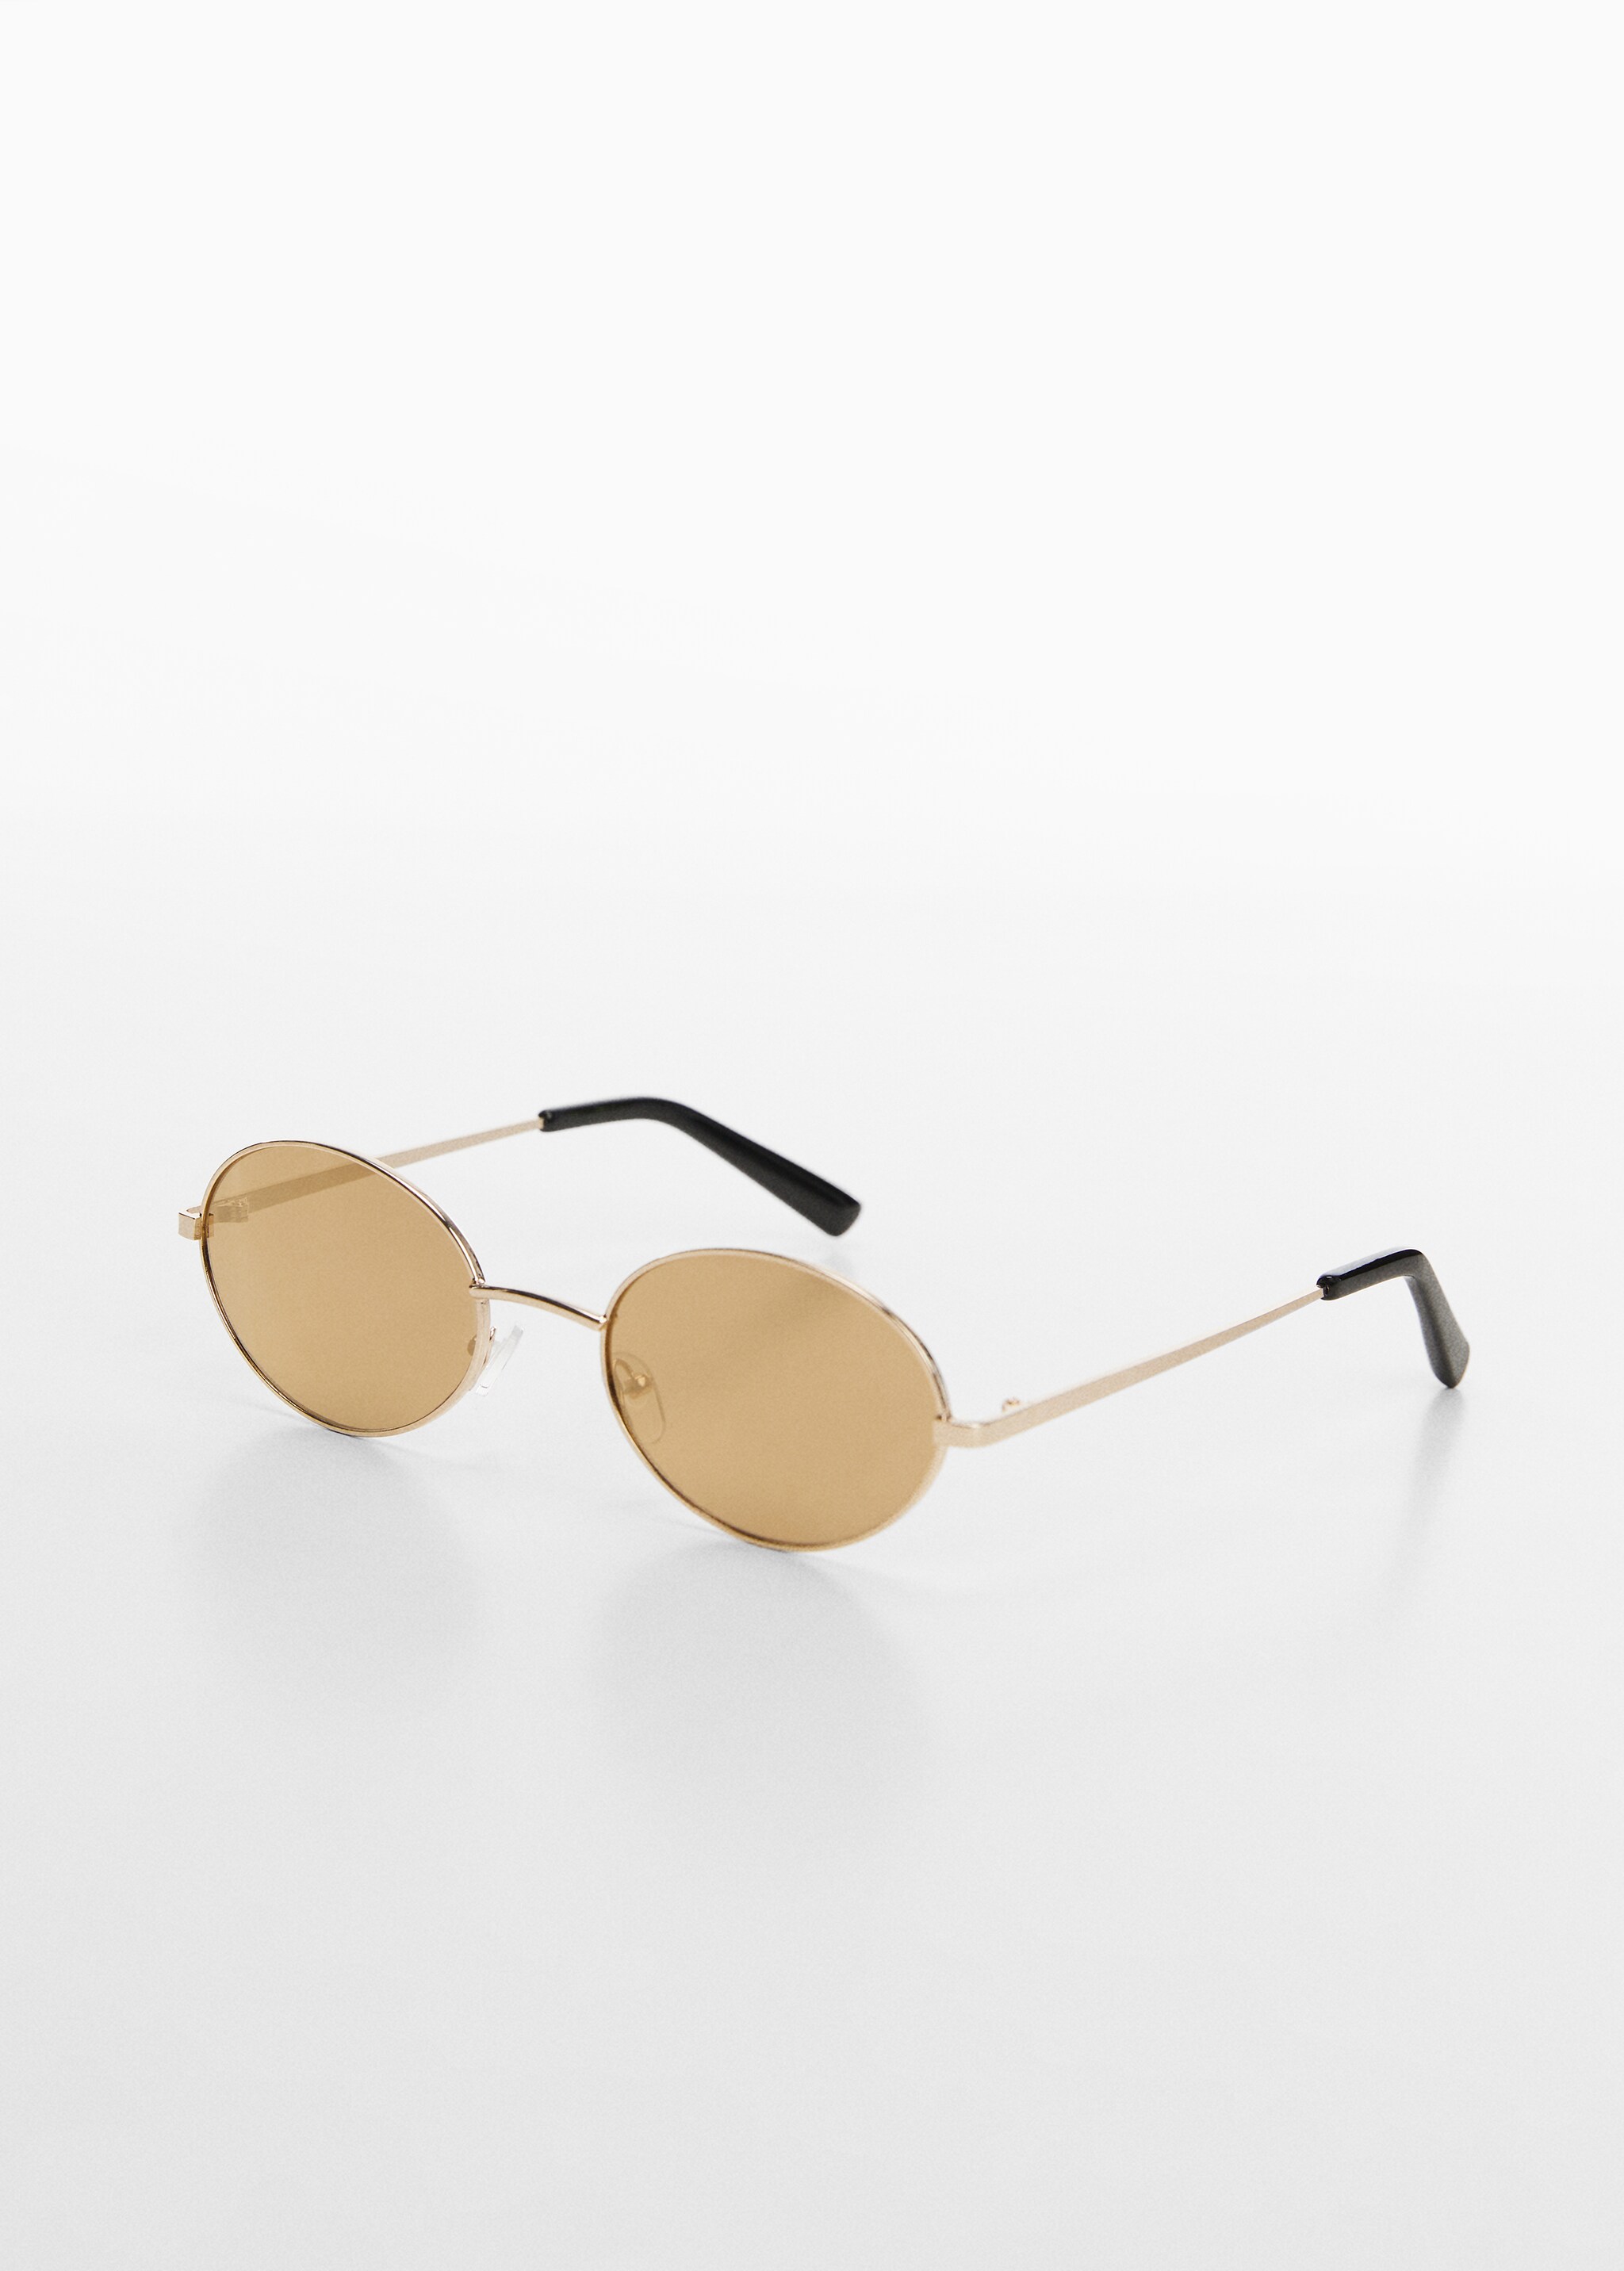 Rounded sunglasses - Medium plane